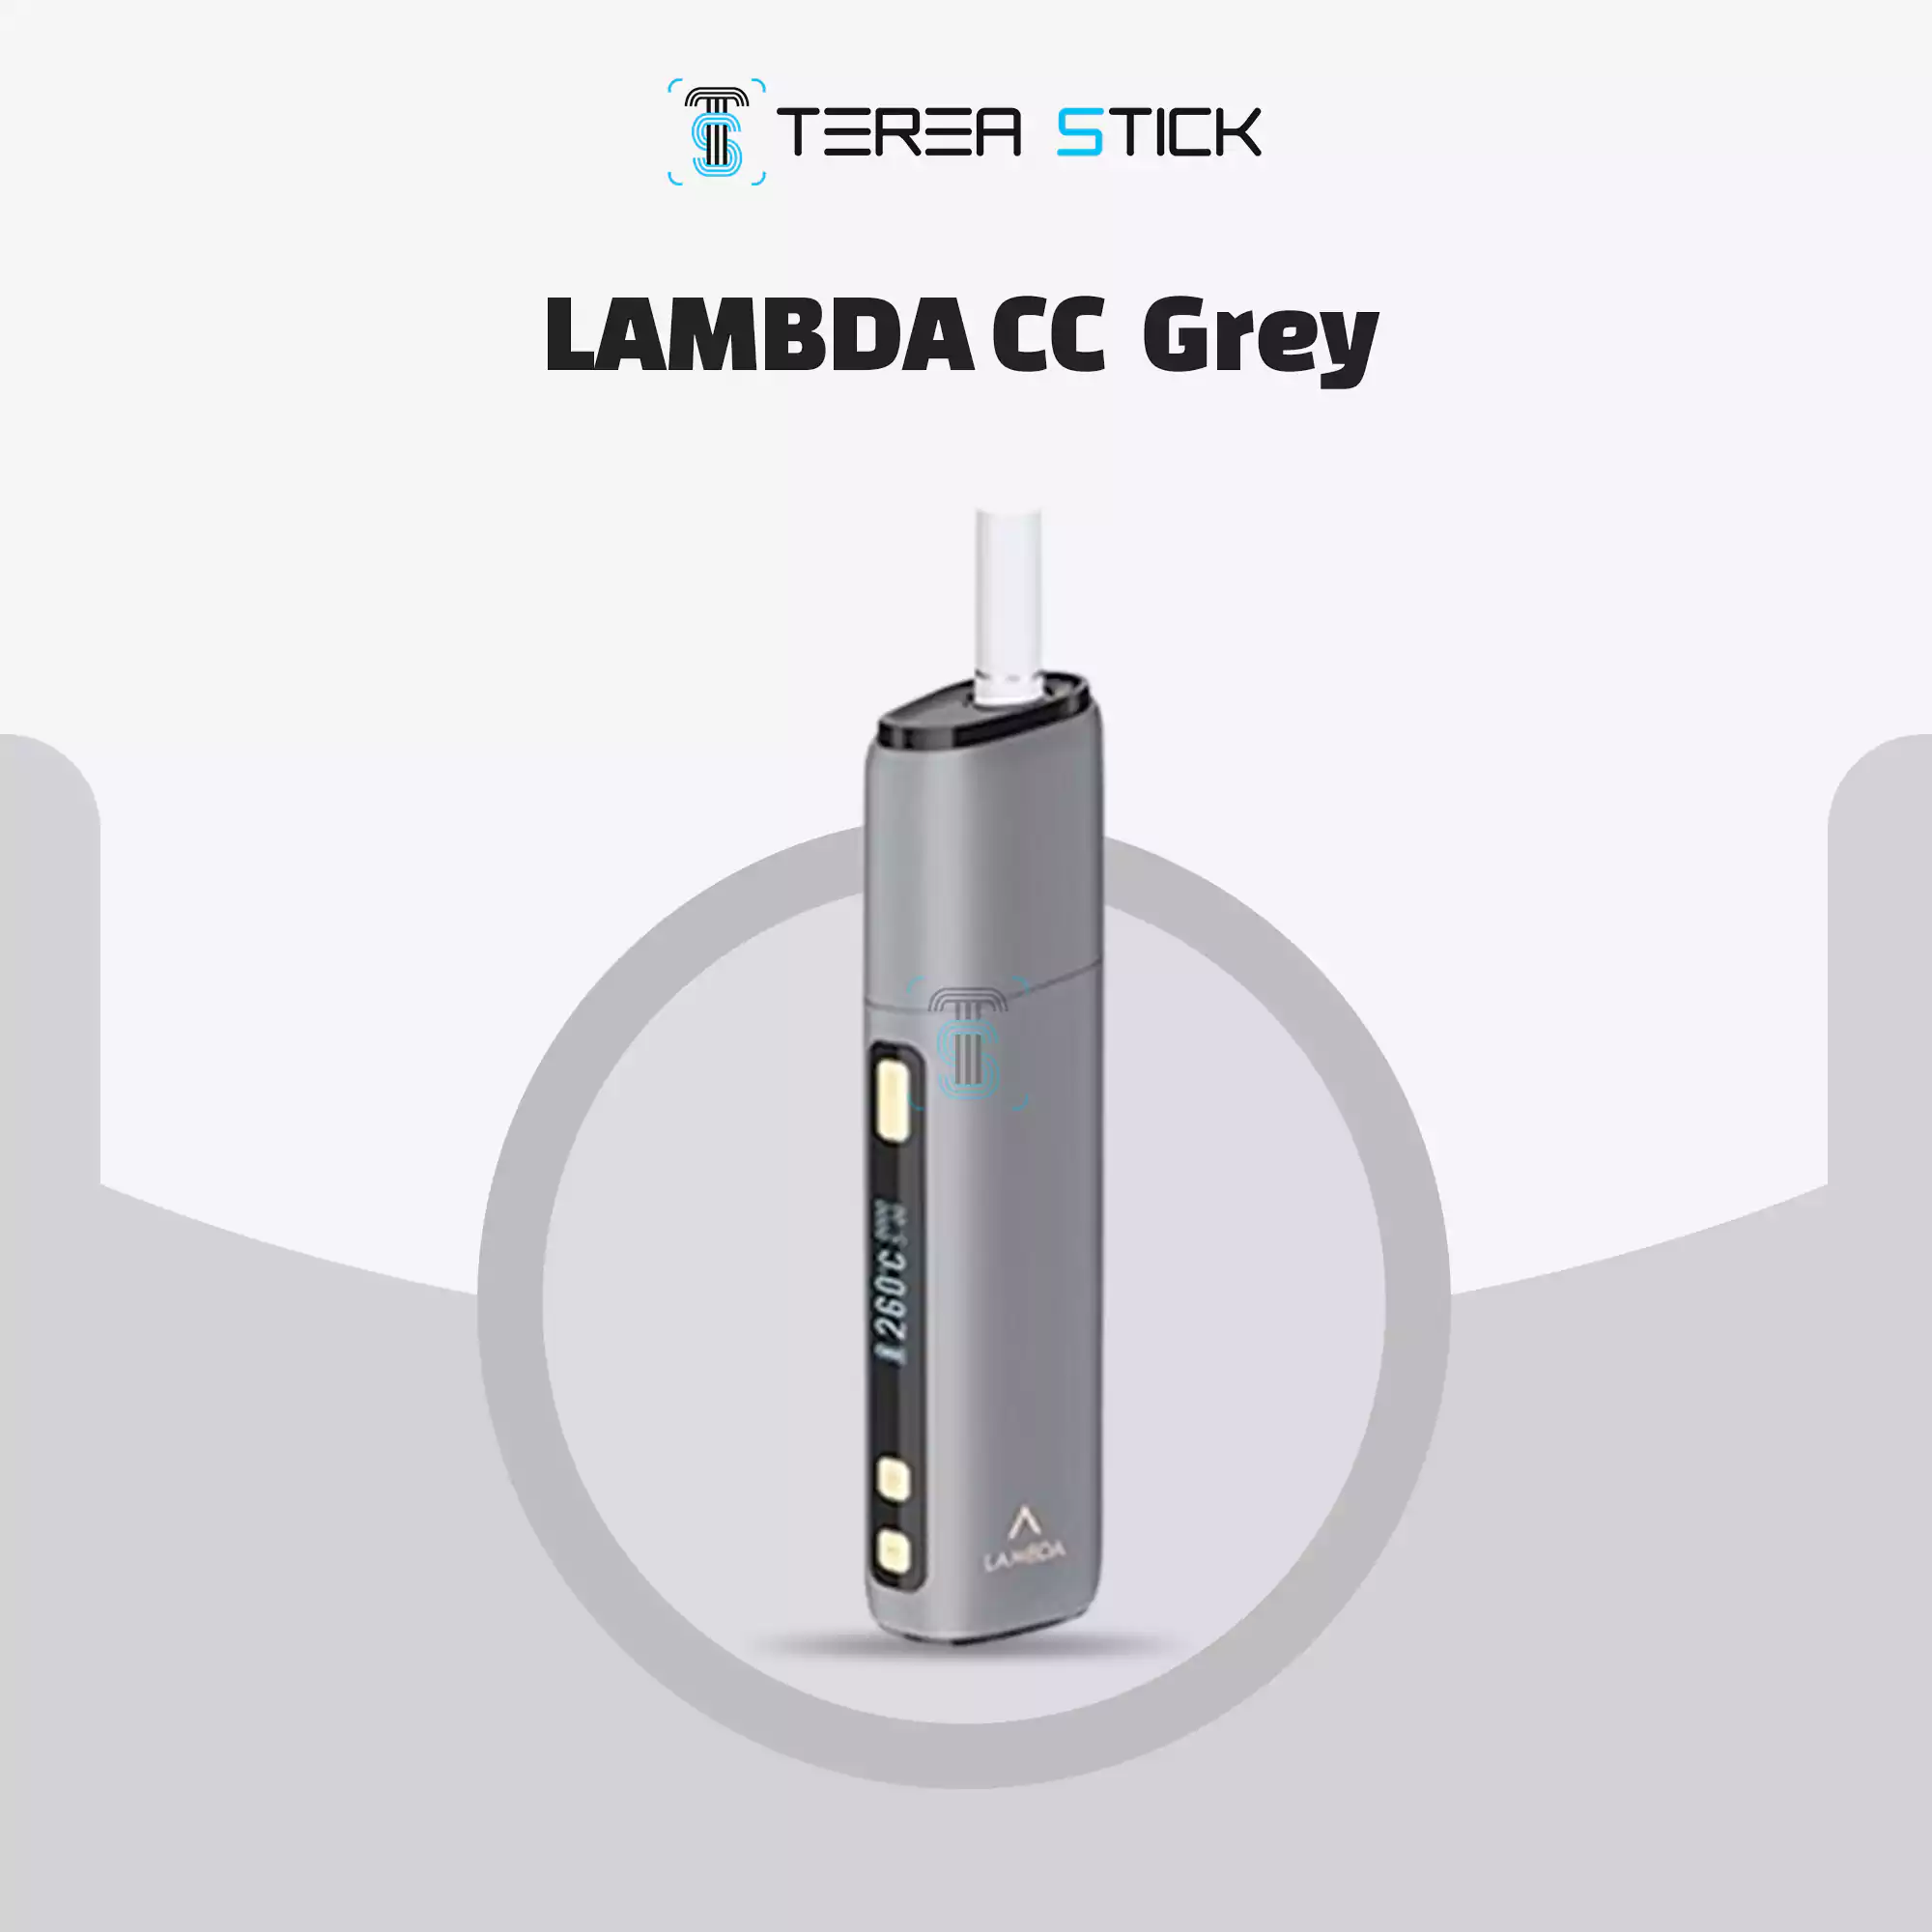 LAMBDA CC Grey For HEETS In UAE